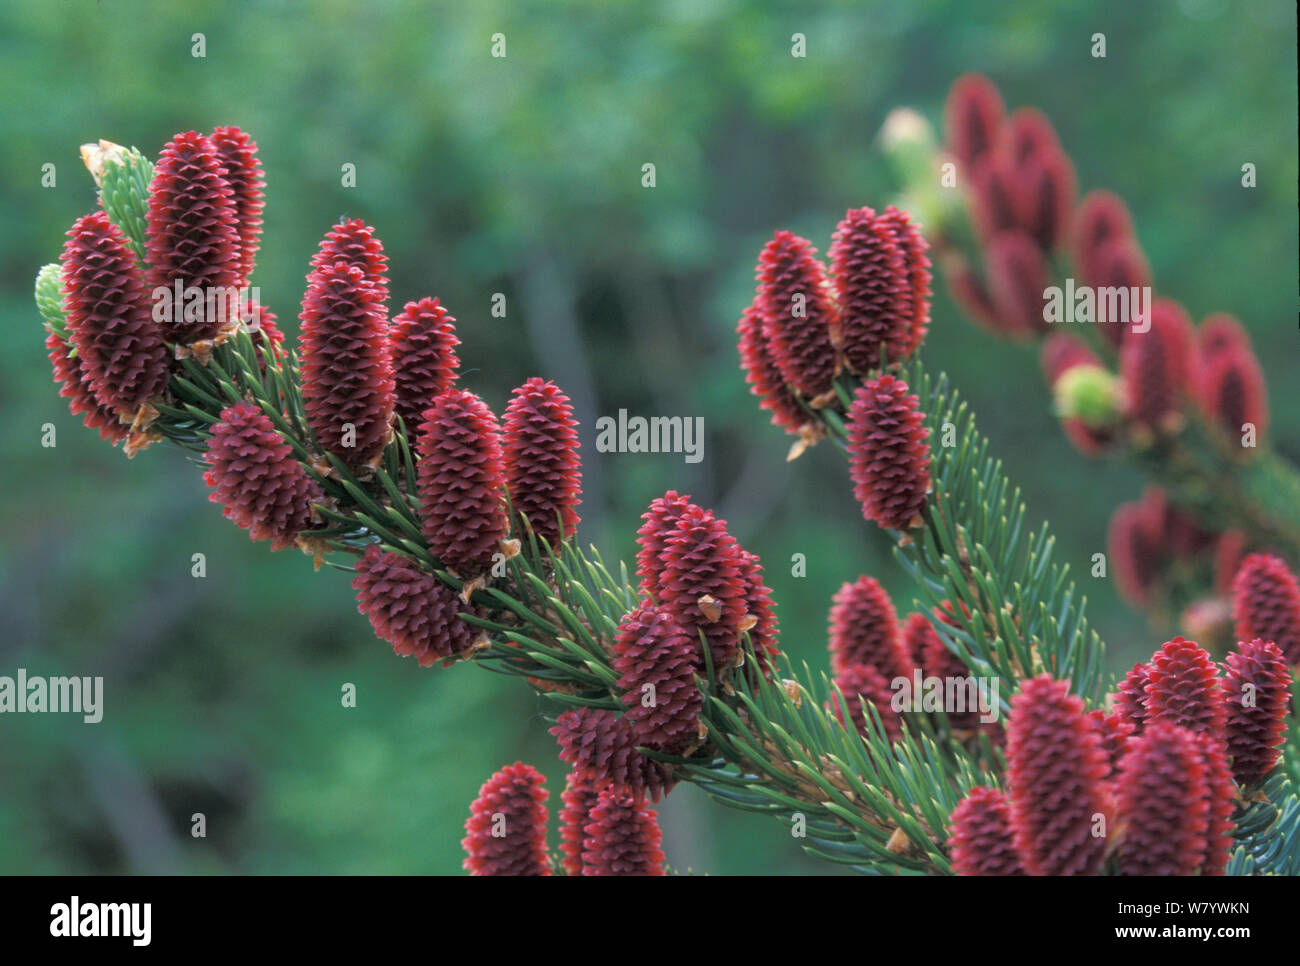 Yeddo spruce (Picea jezoensis) flower cones, Amur Region, Russia. Stock Photo